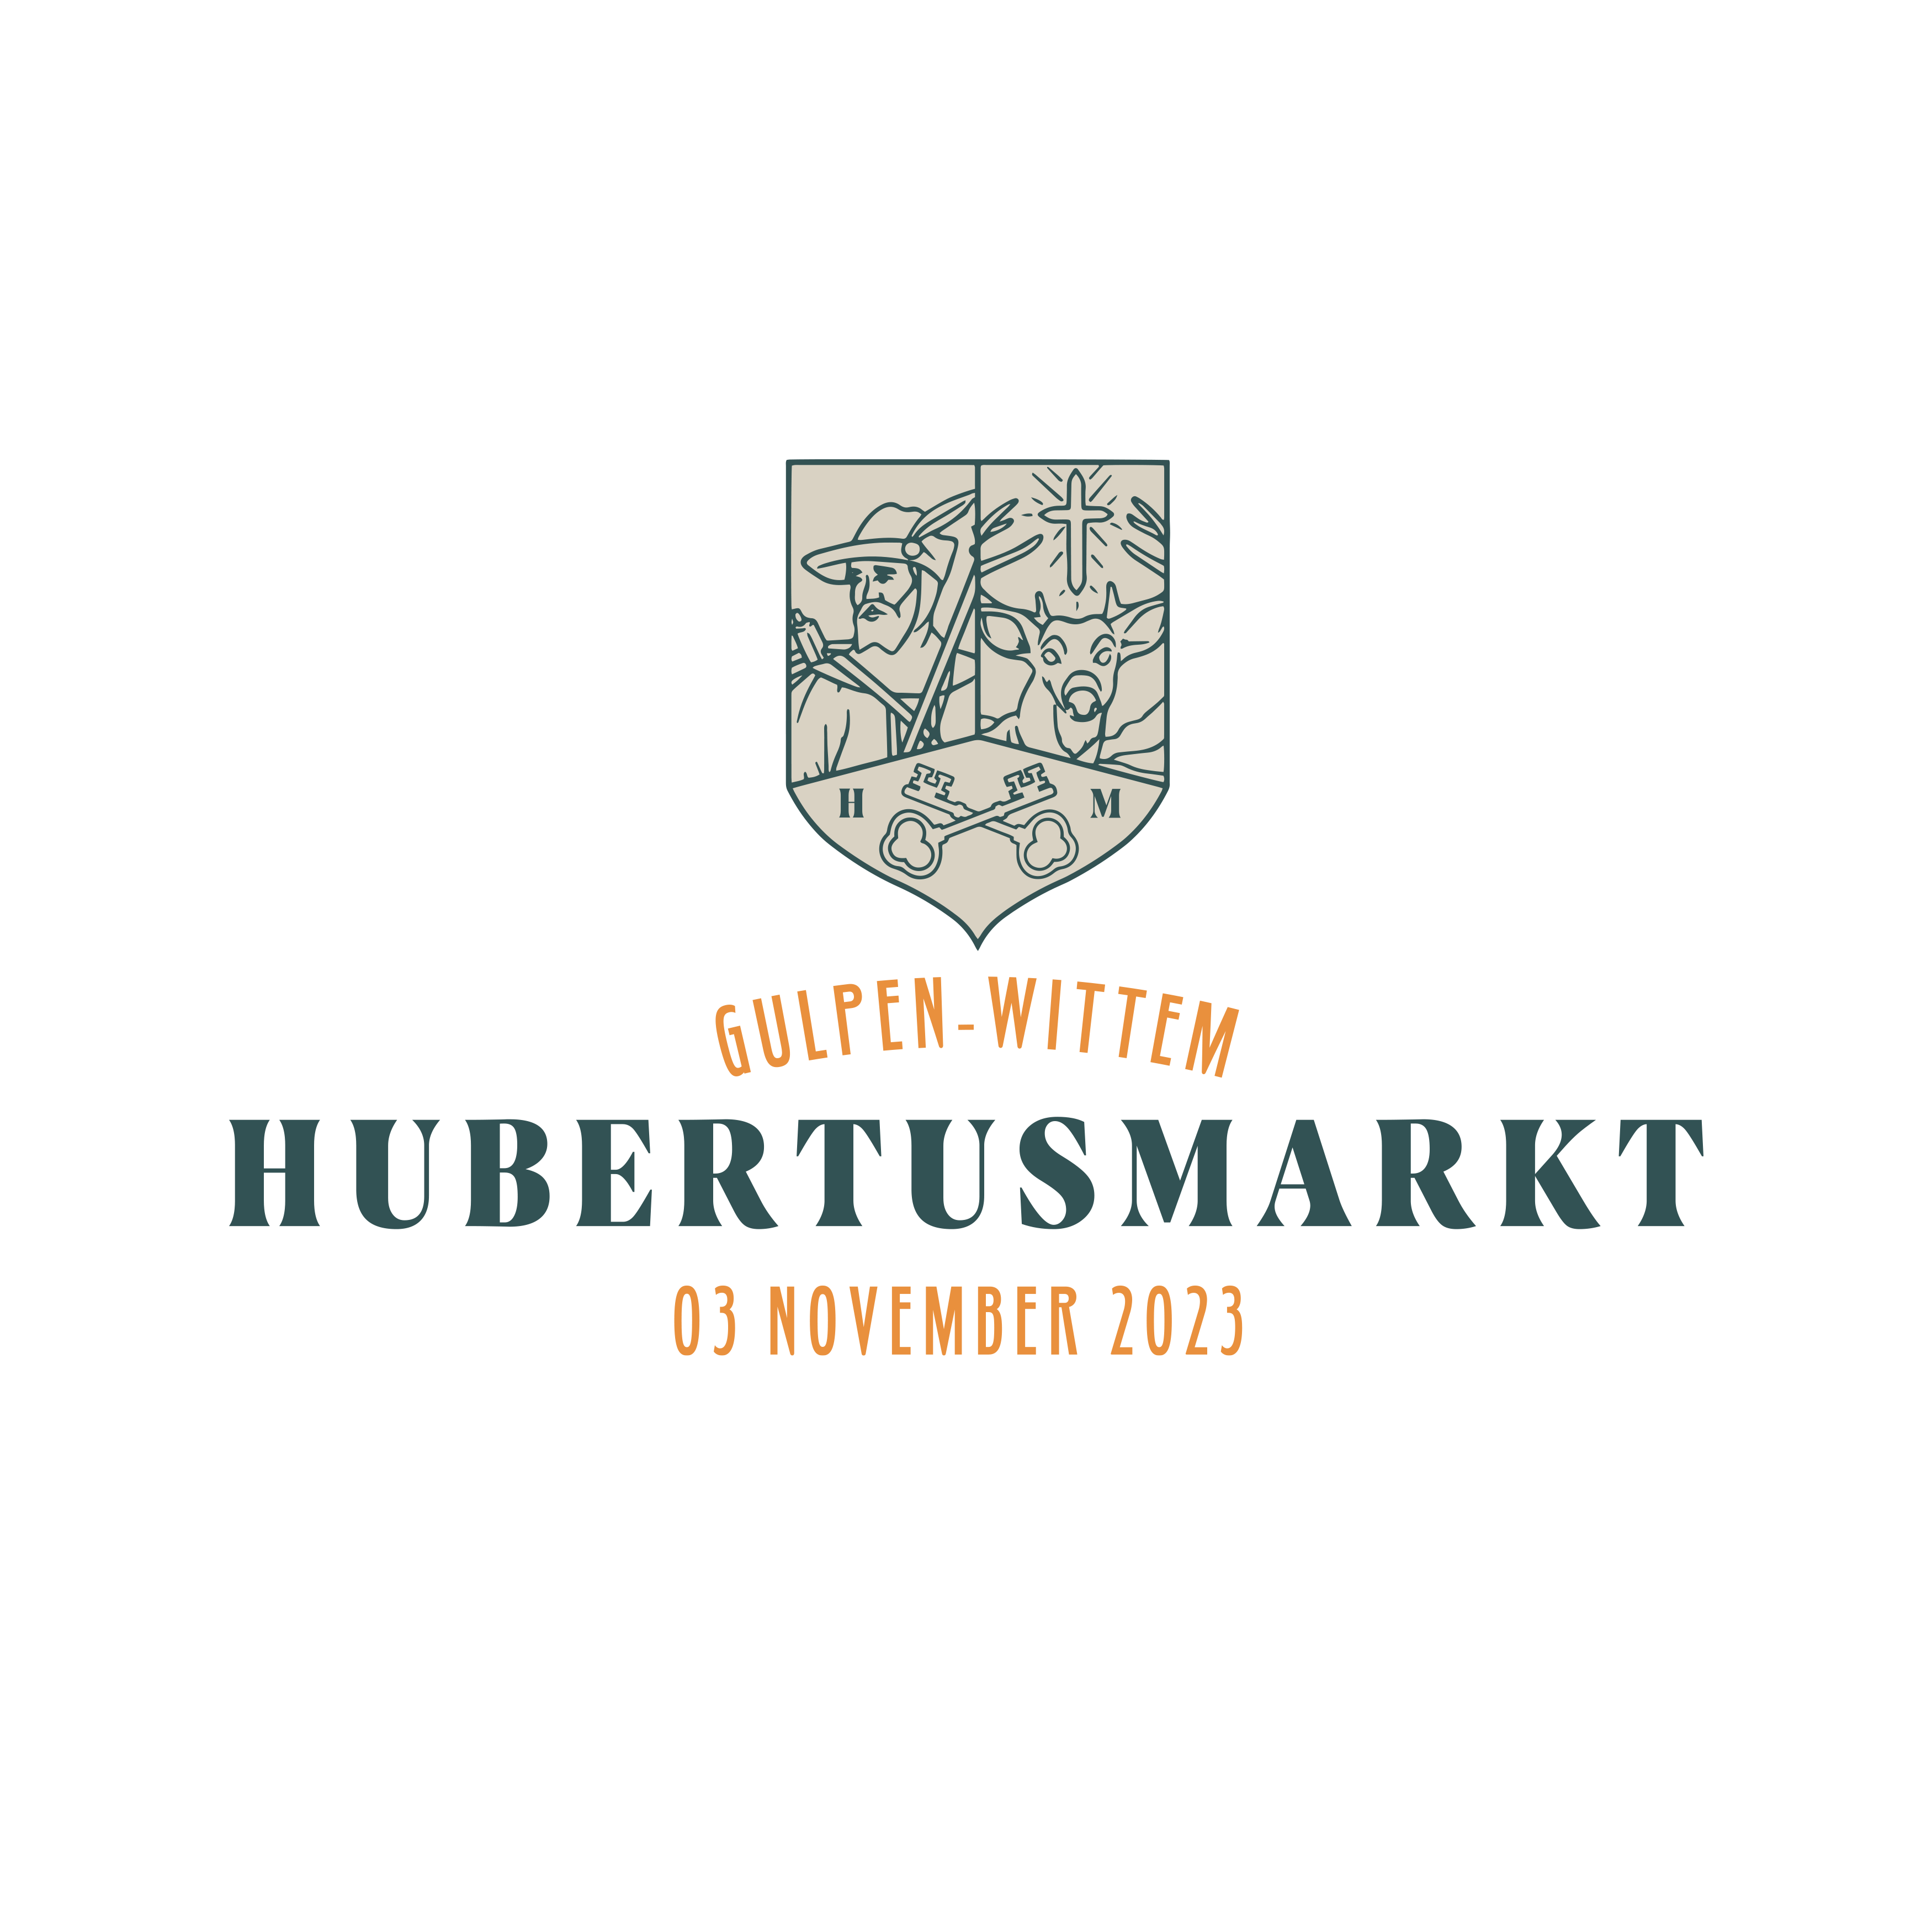 Hubertusmarkt logo